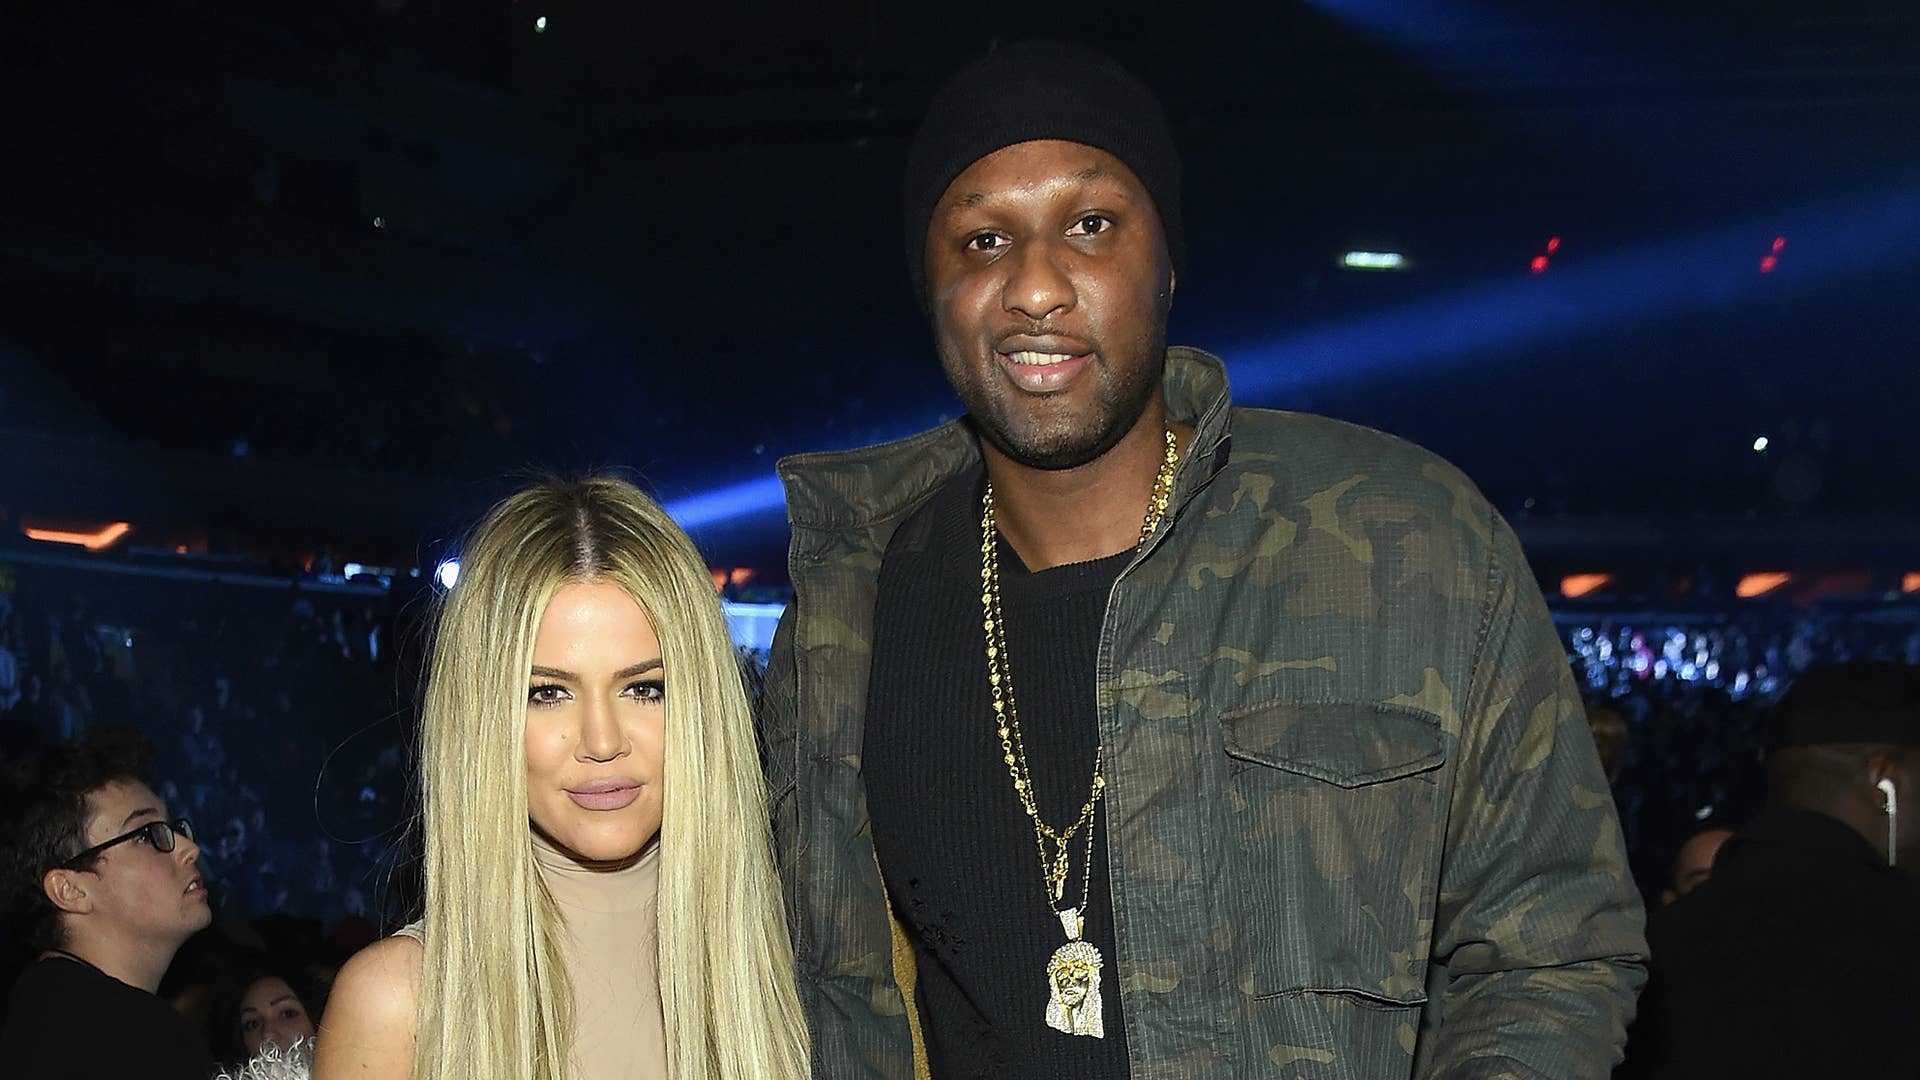 Khloe Kardashian and Lamar Odom attend Kanye West Yeezy Season 3